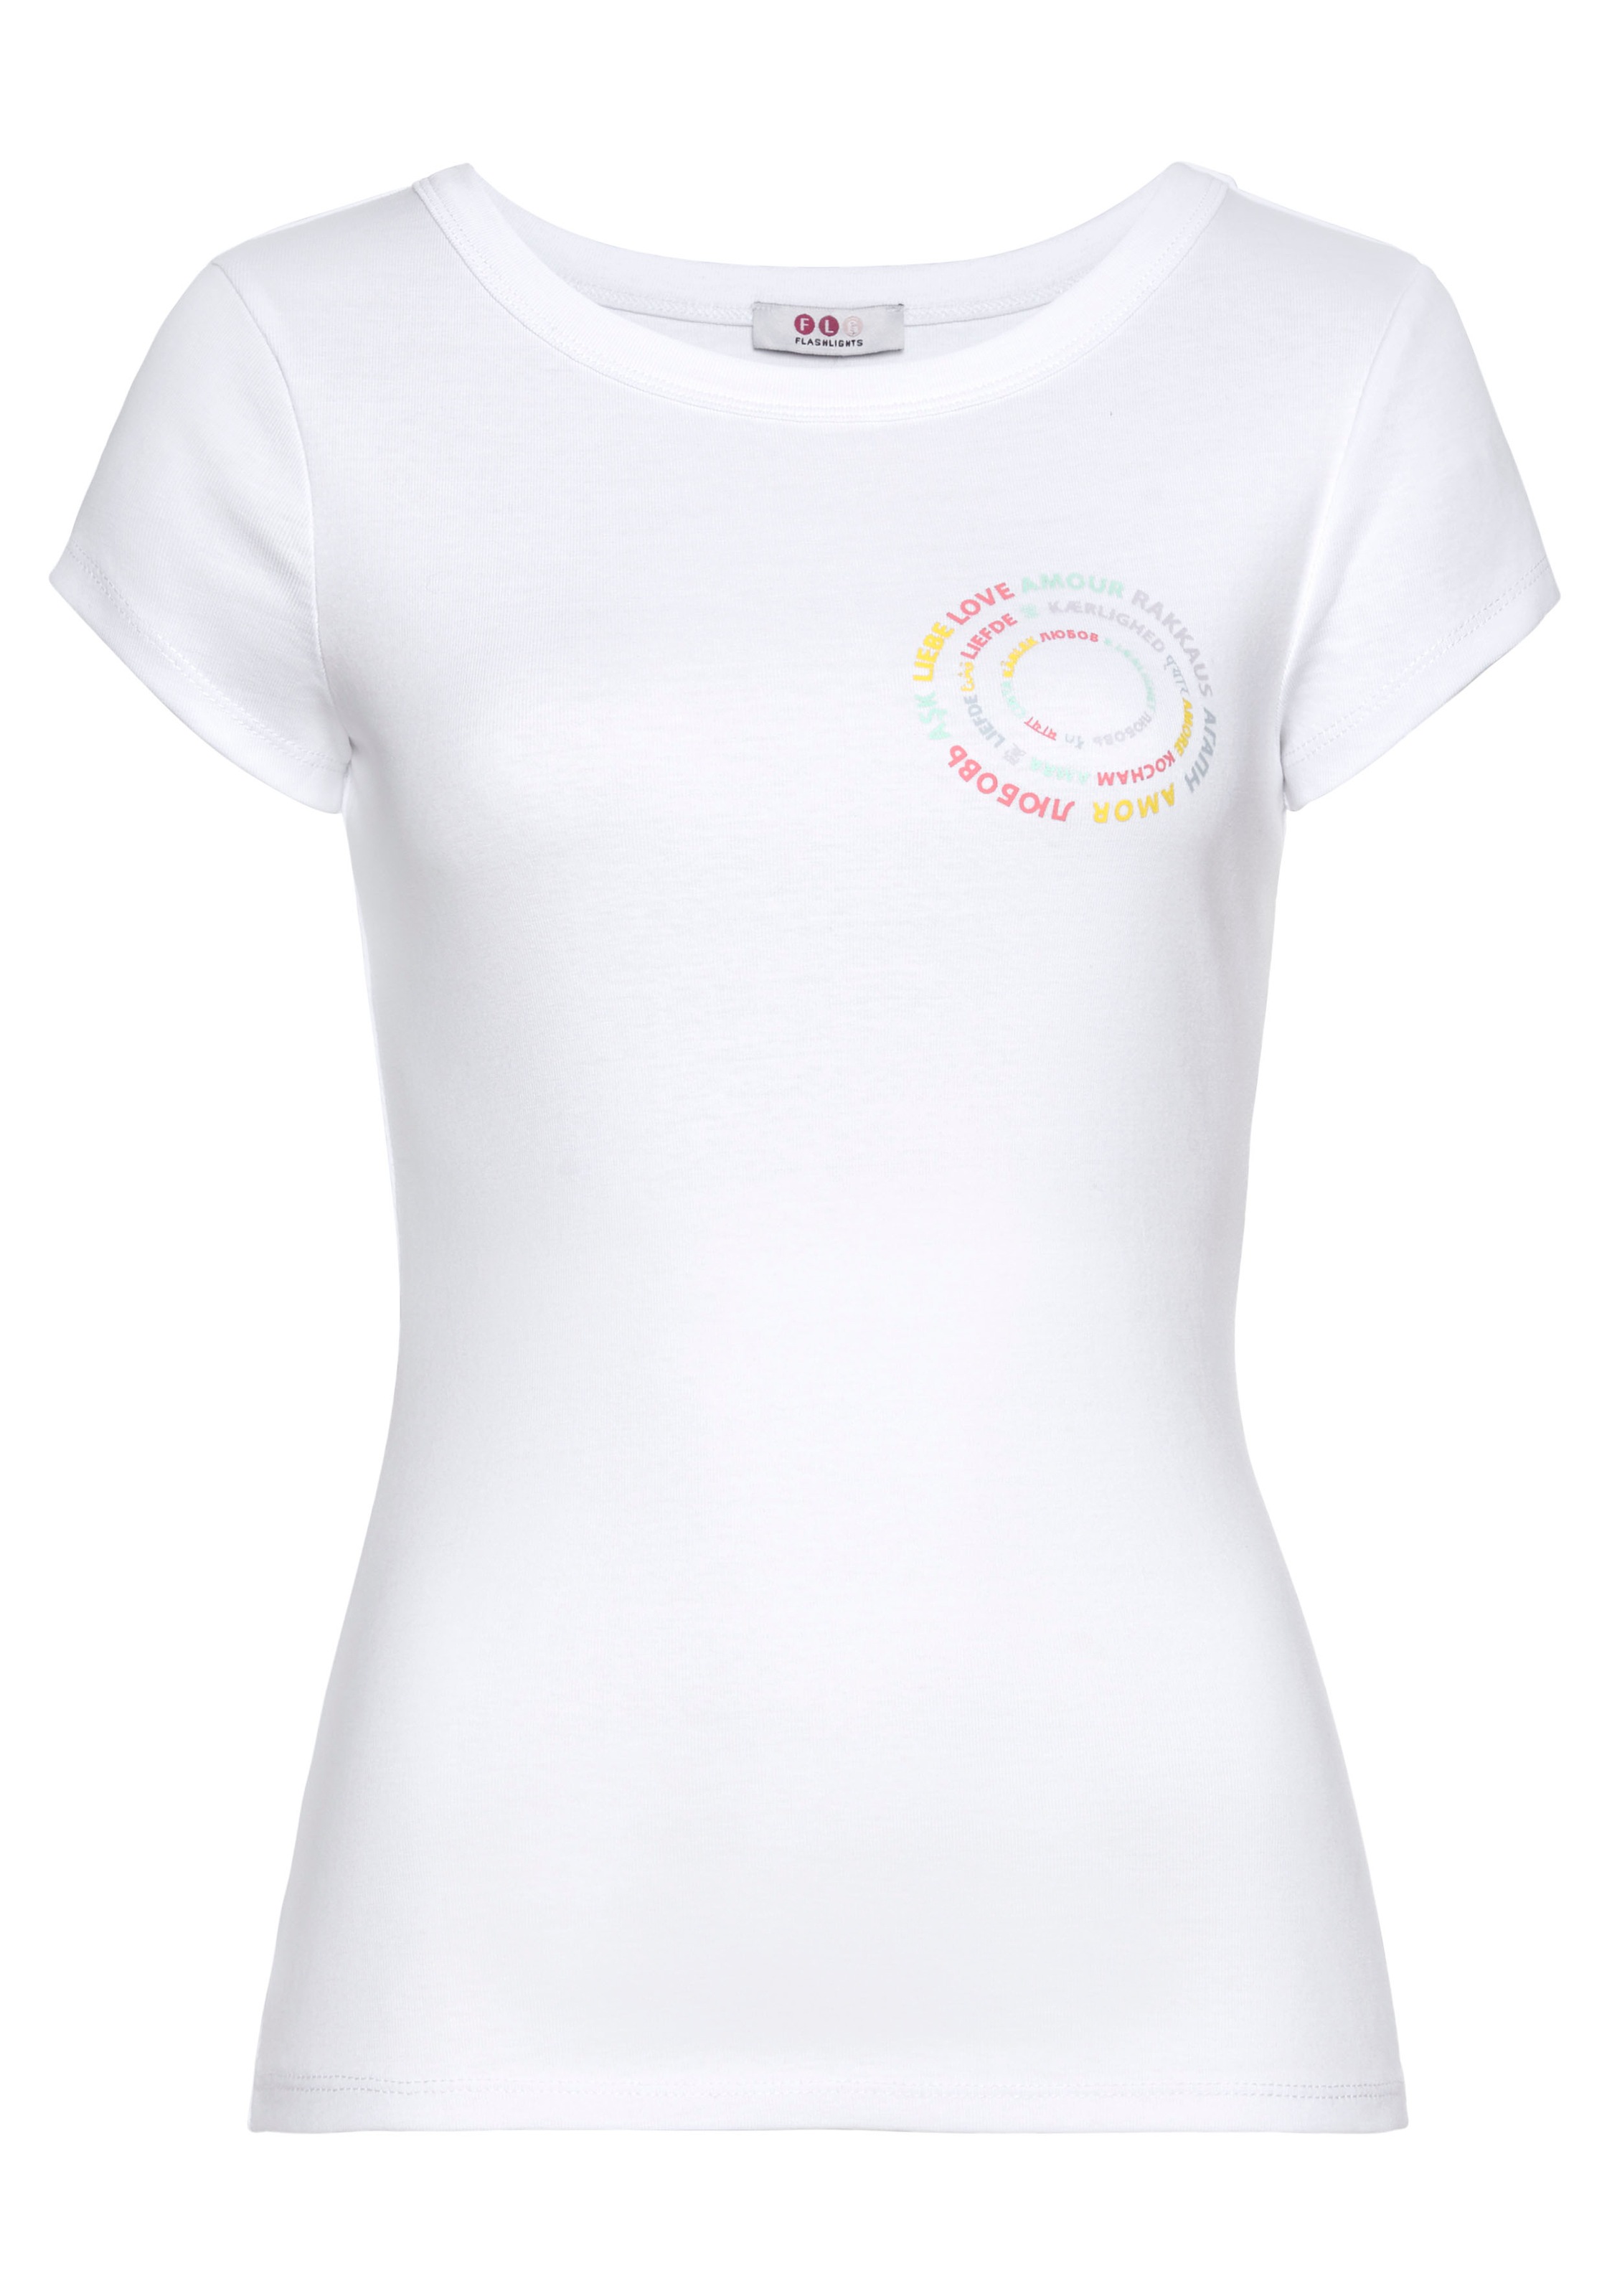 T-Shirt, Flashlights Online Edition OTTO Shop im Pride